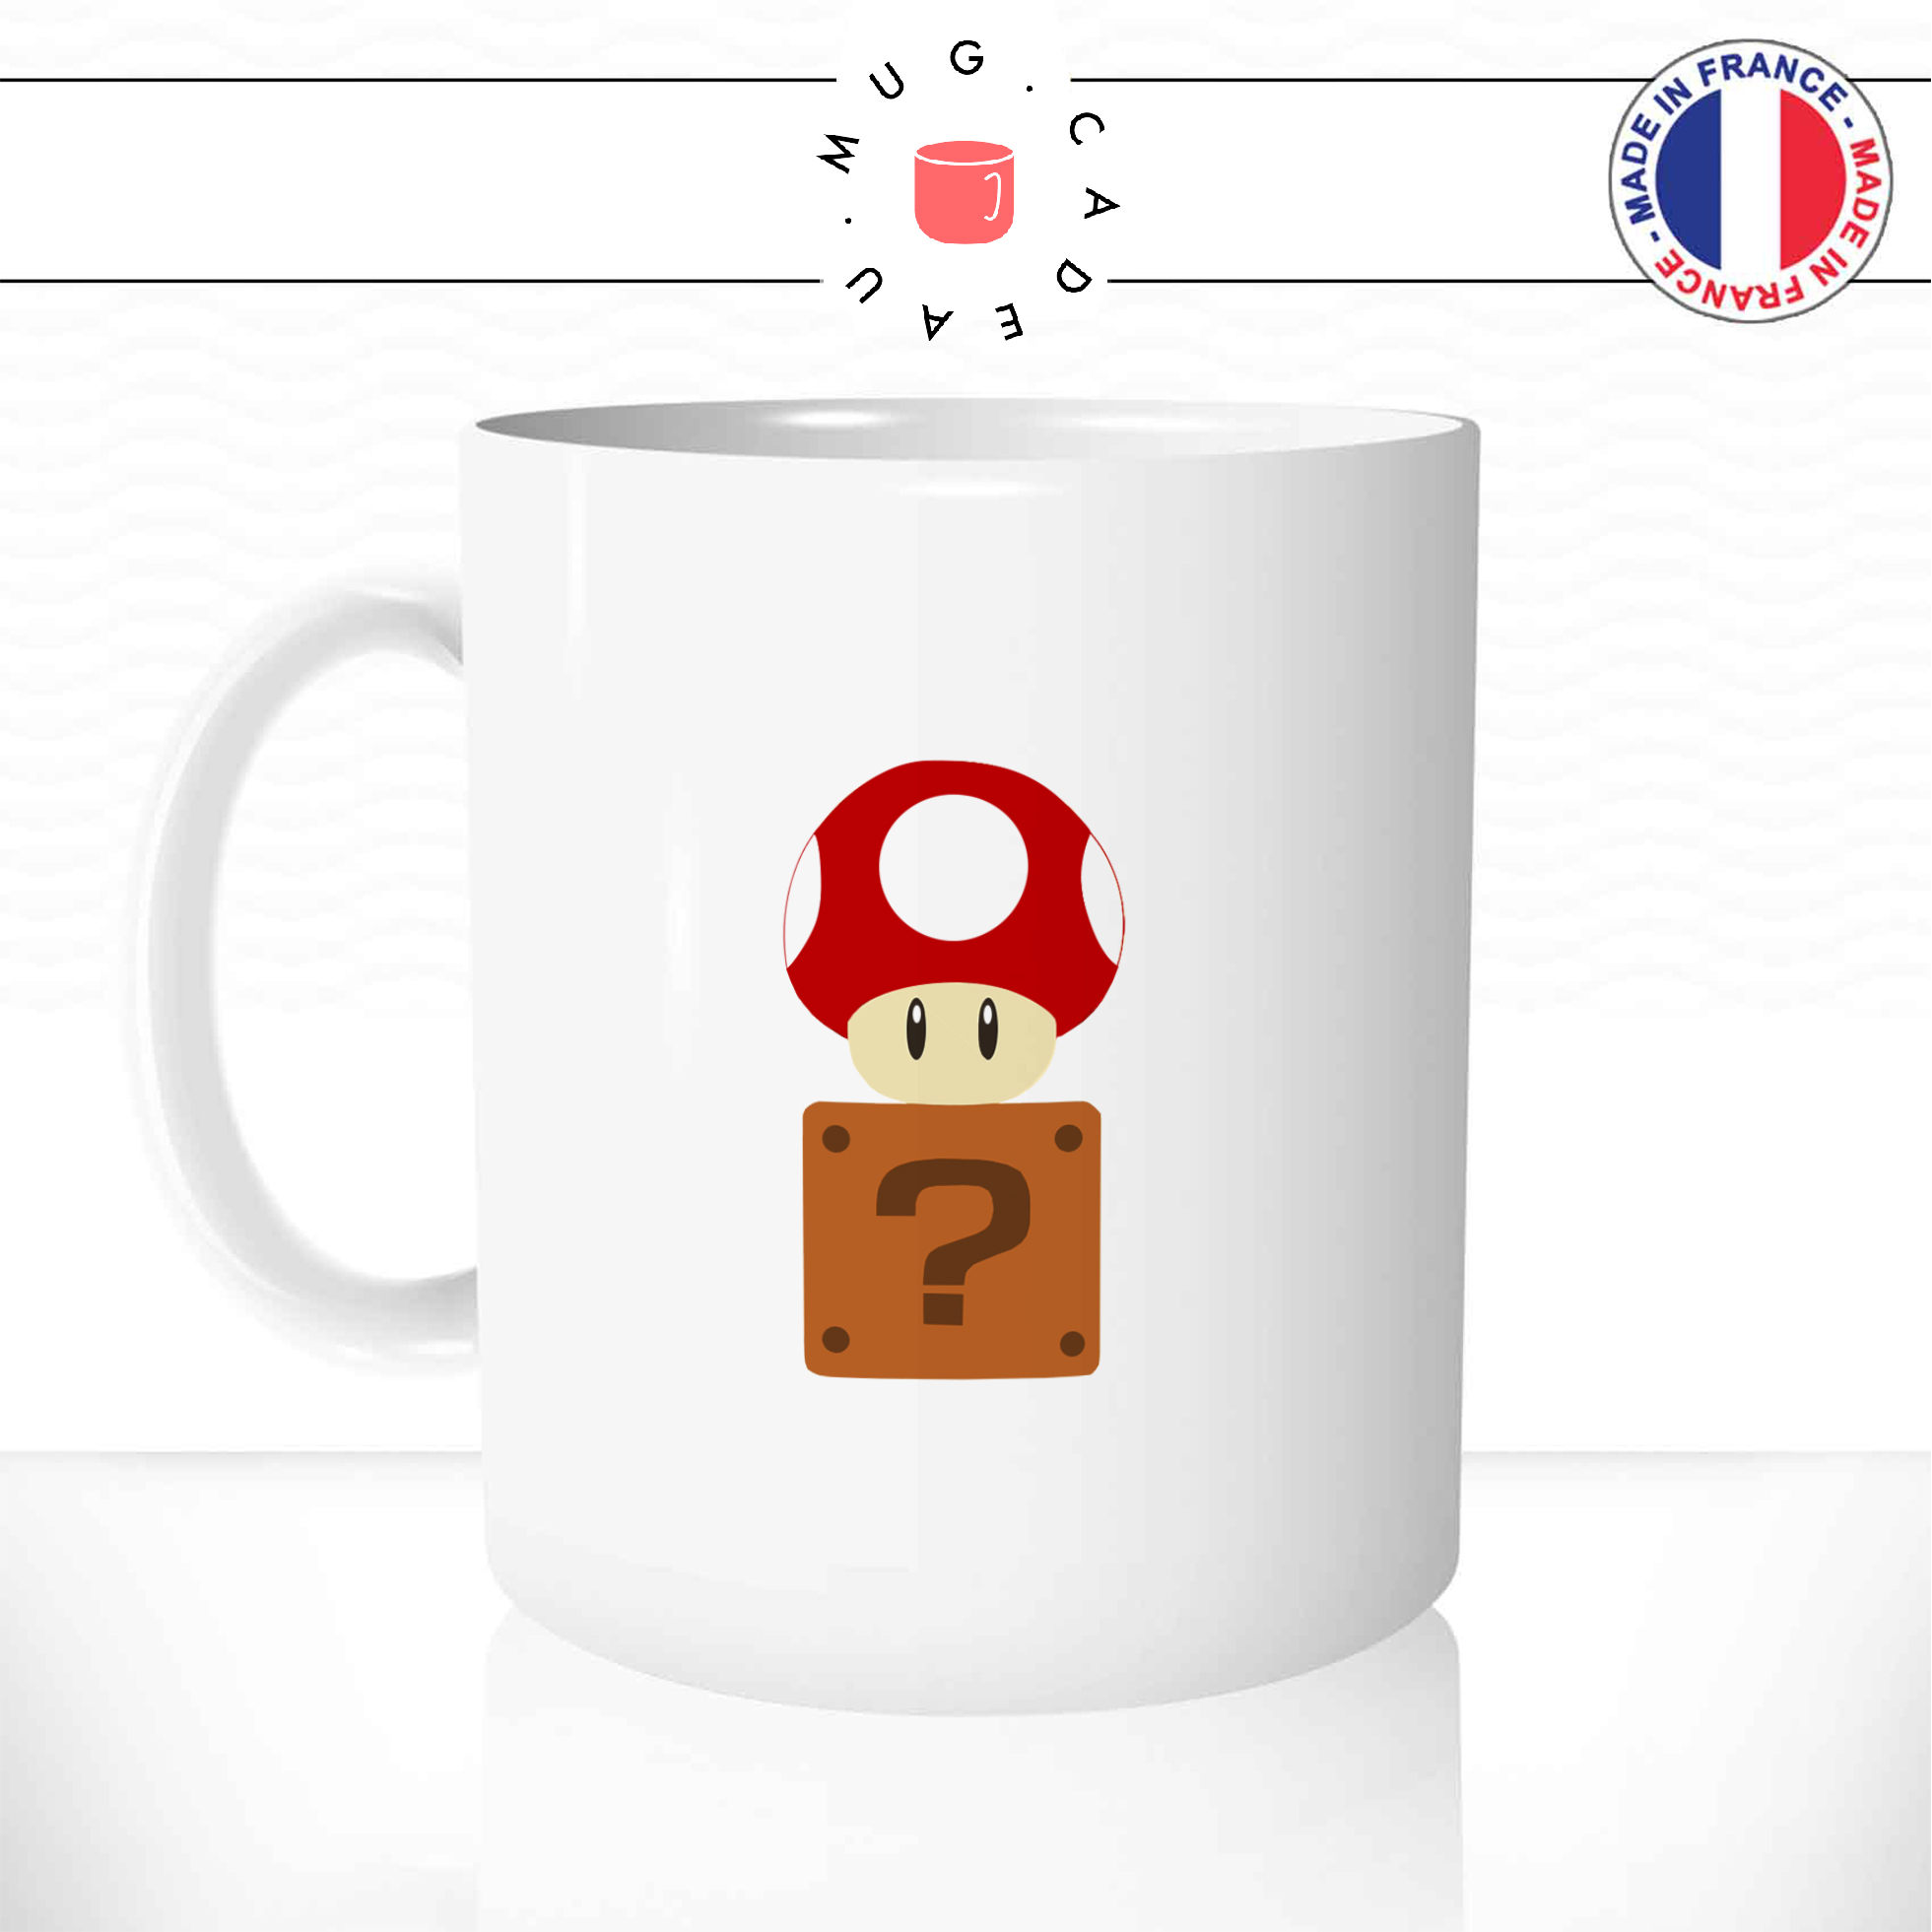 mug-tasse-ref6-jeux-video-champignon-toad-case-interrogation-cafe-the-mugs-tasses-personnalise-anse-gauche